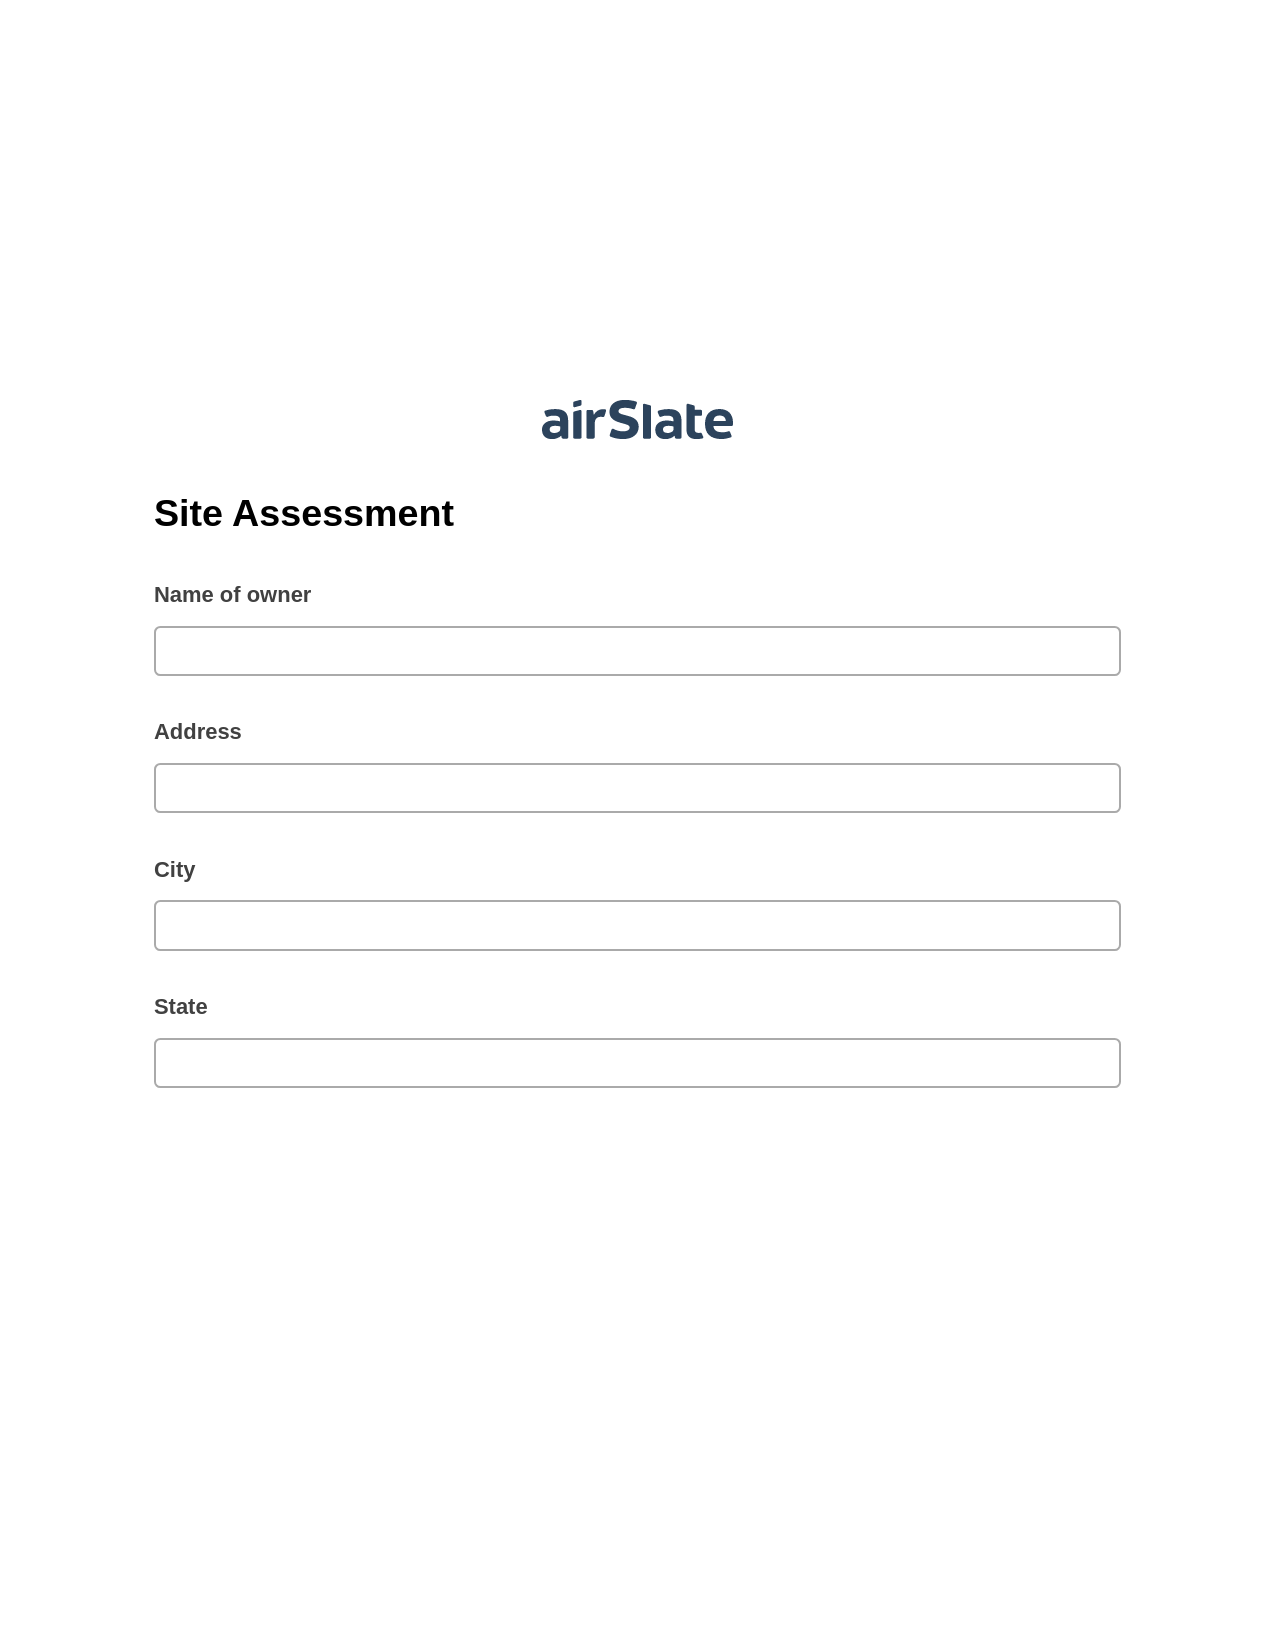 Site Assessment Pre-fill from CSV File Dropdown Options Bot, Google Calendar Bot, Export to Google Sheet Bot